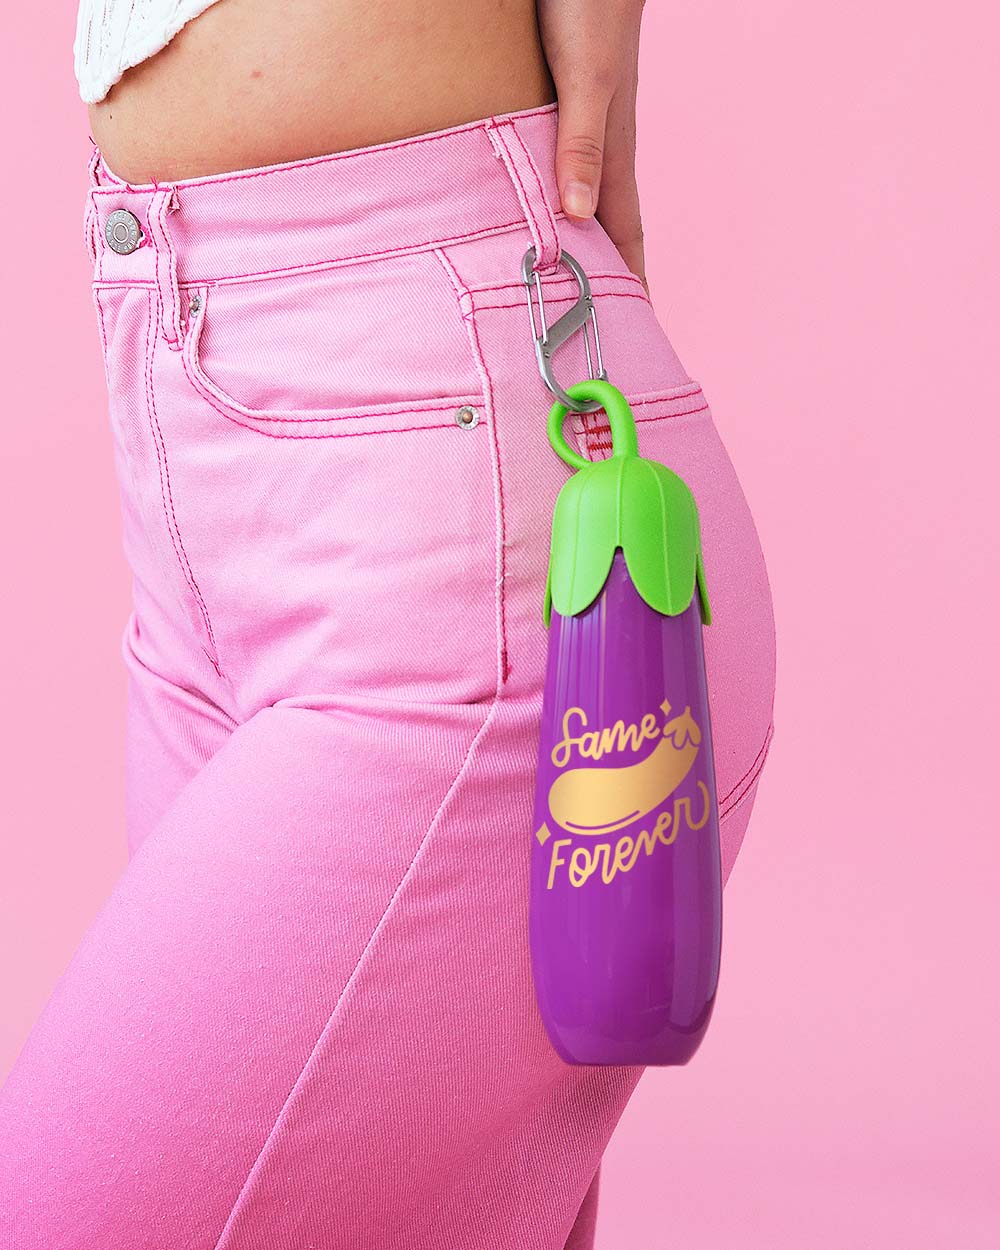 Same 🍆 Forever Pack - 4 eggplant water bottles